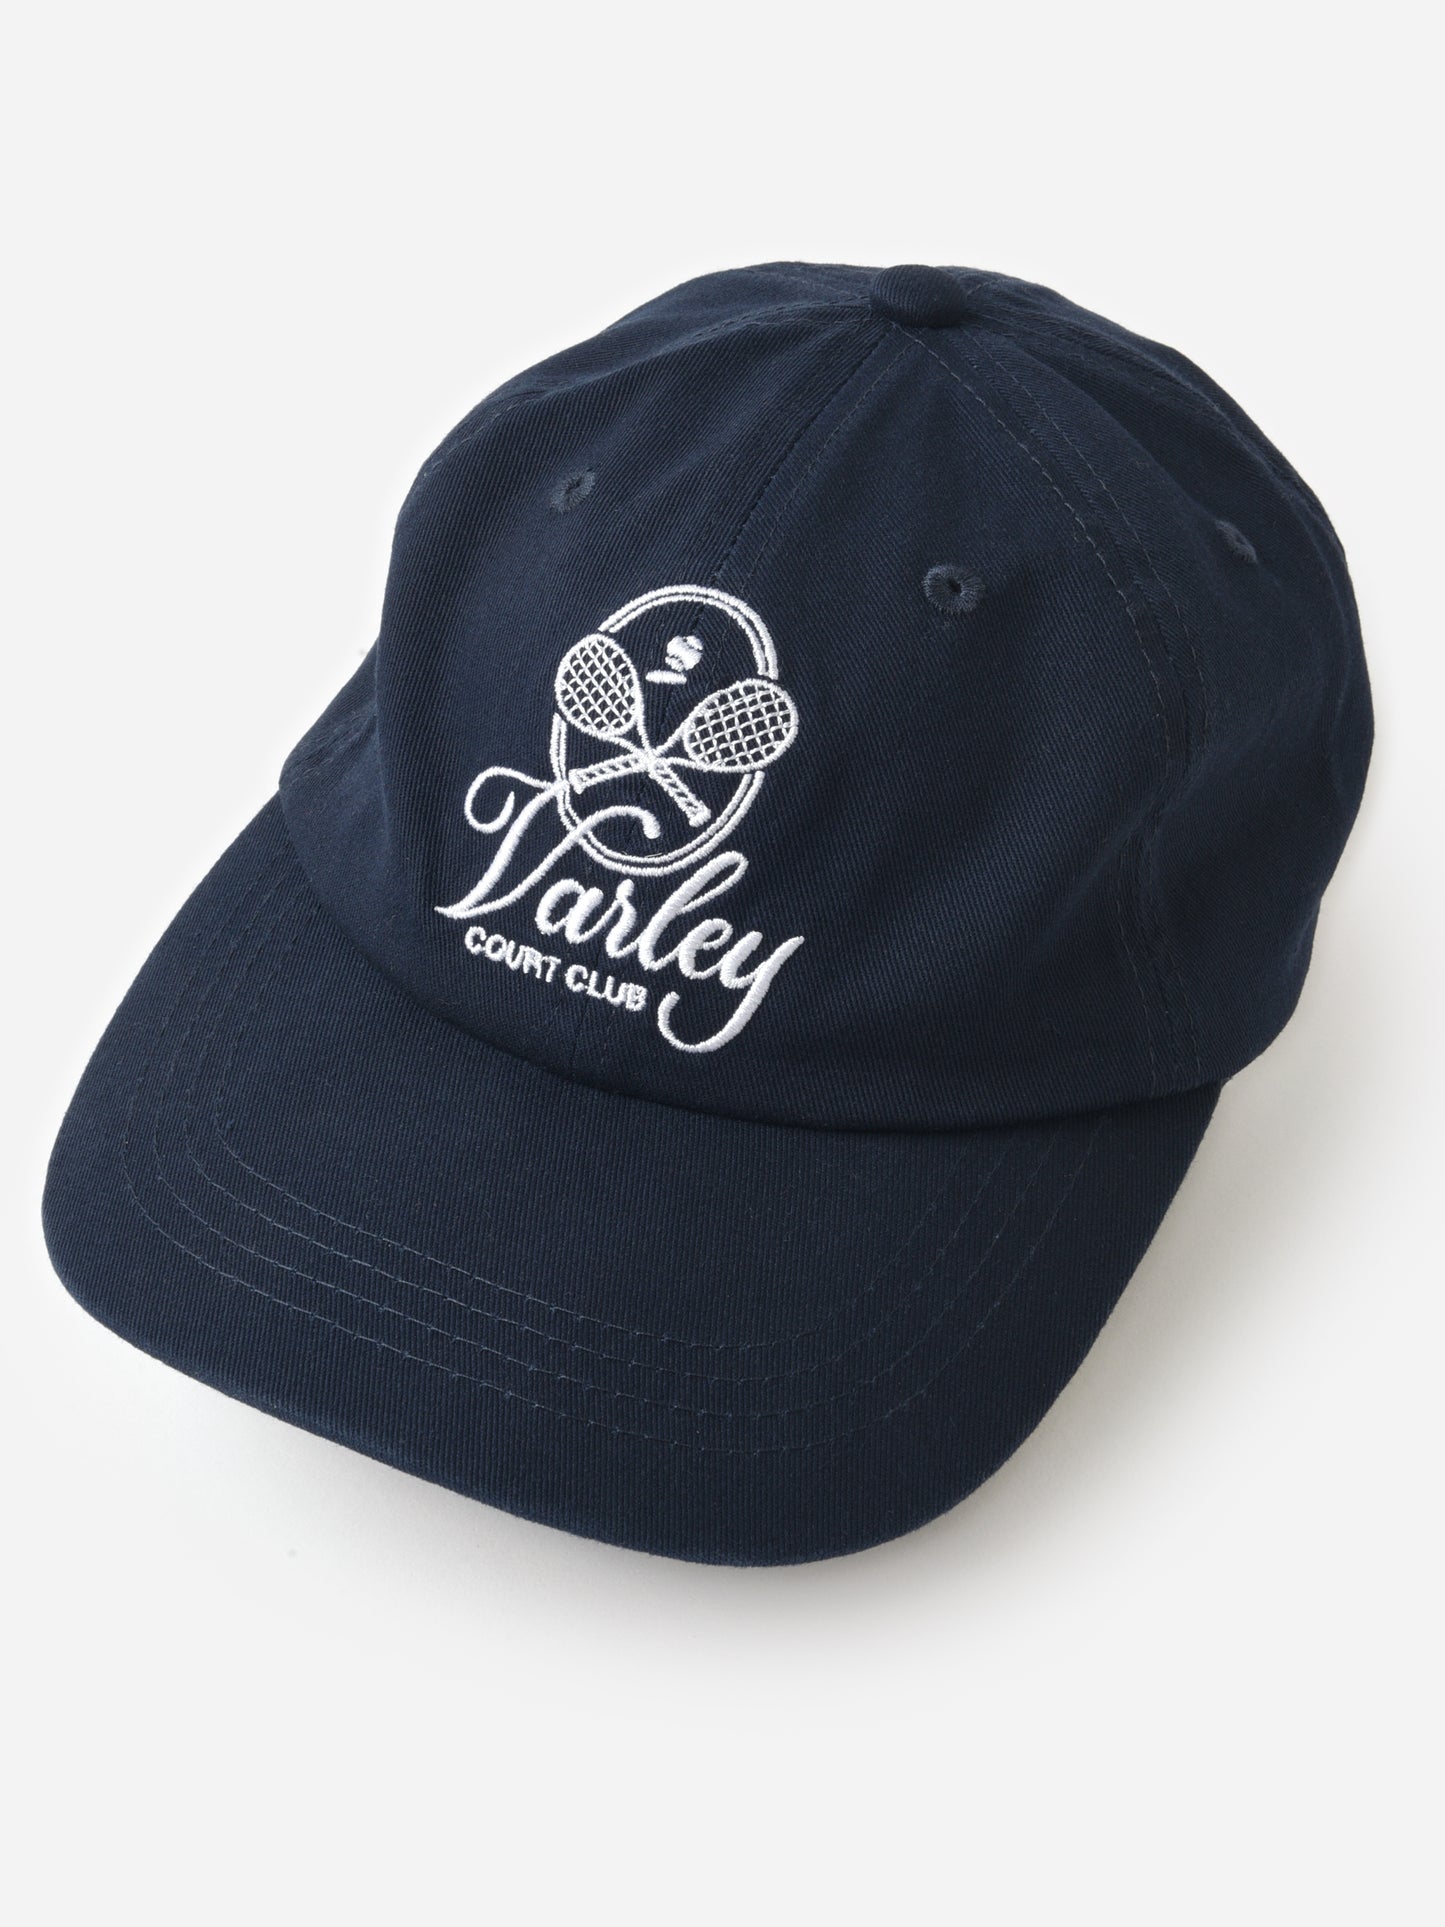 Varley Women's Noa Club Cap